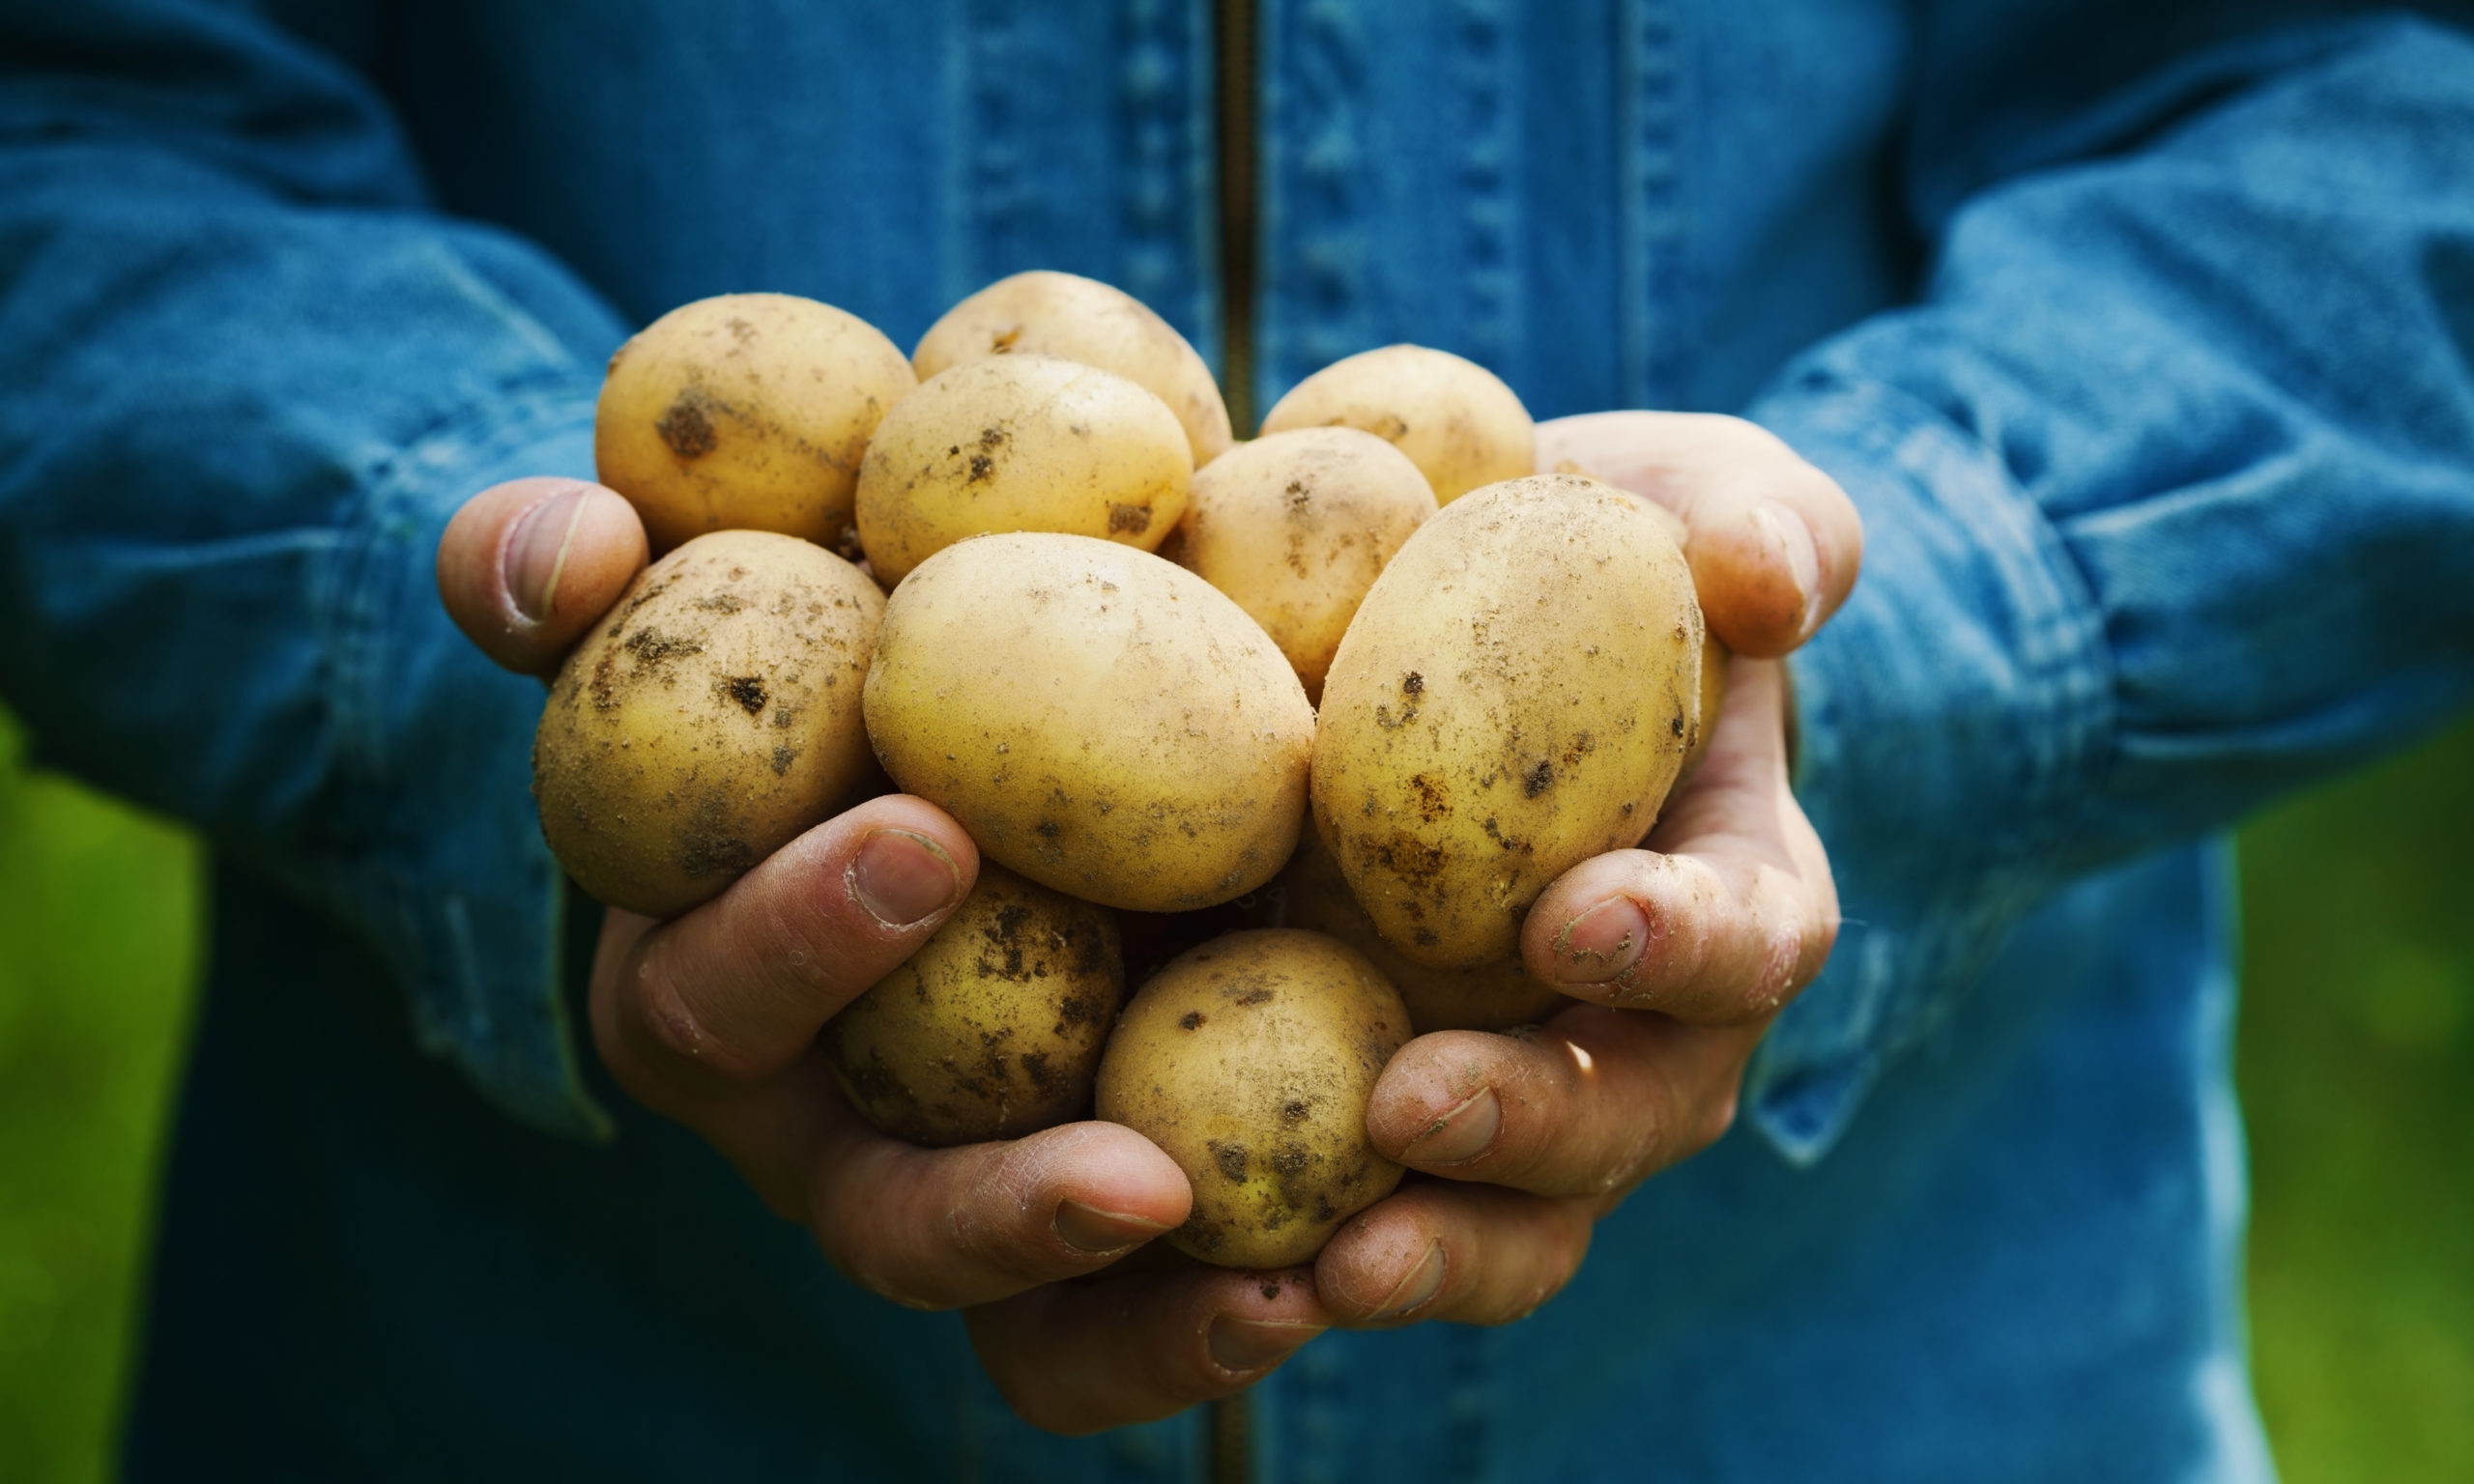 Potatoes grown in an allotment.